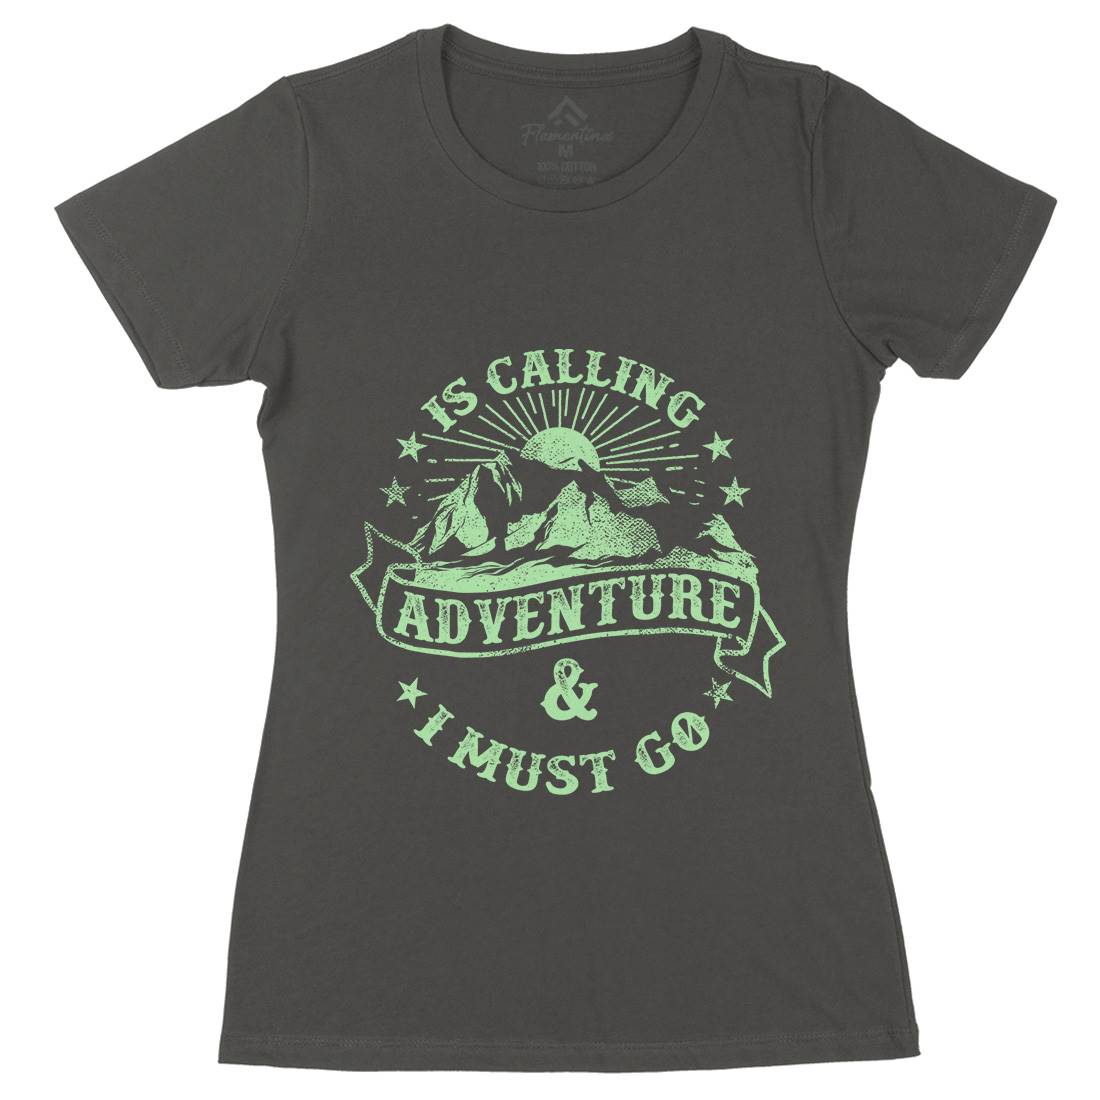 Is Calling Adventure Womens Organic Crew Neck T-Shirt Nature C954